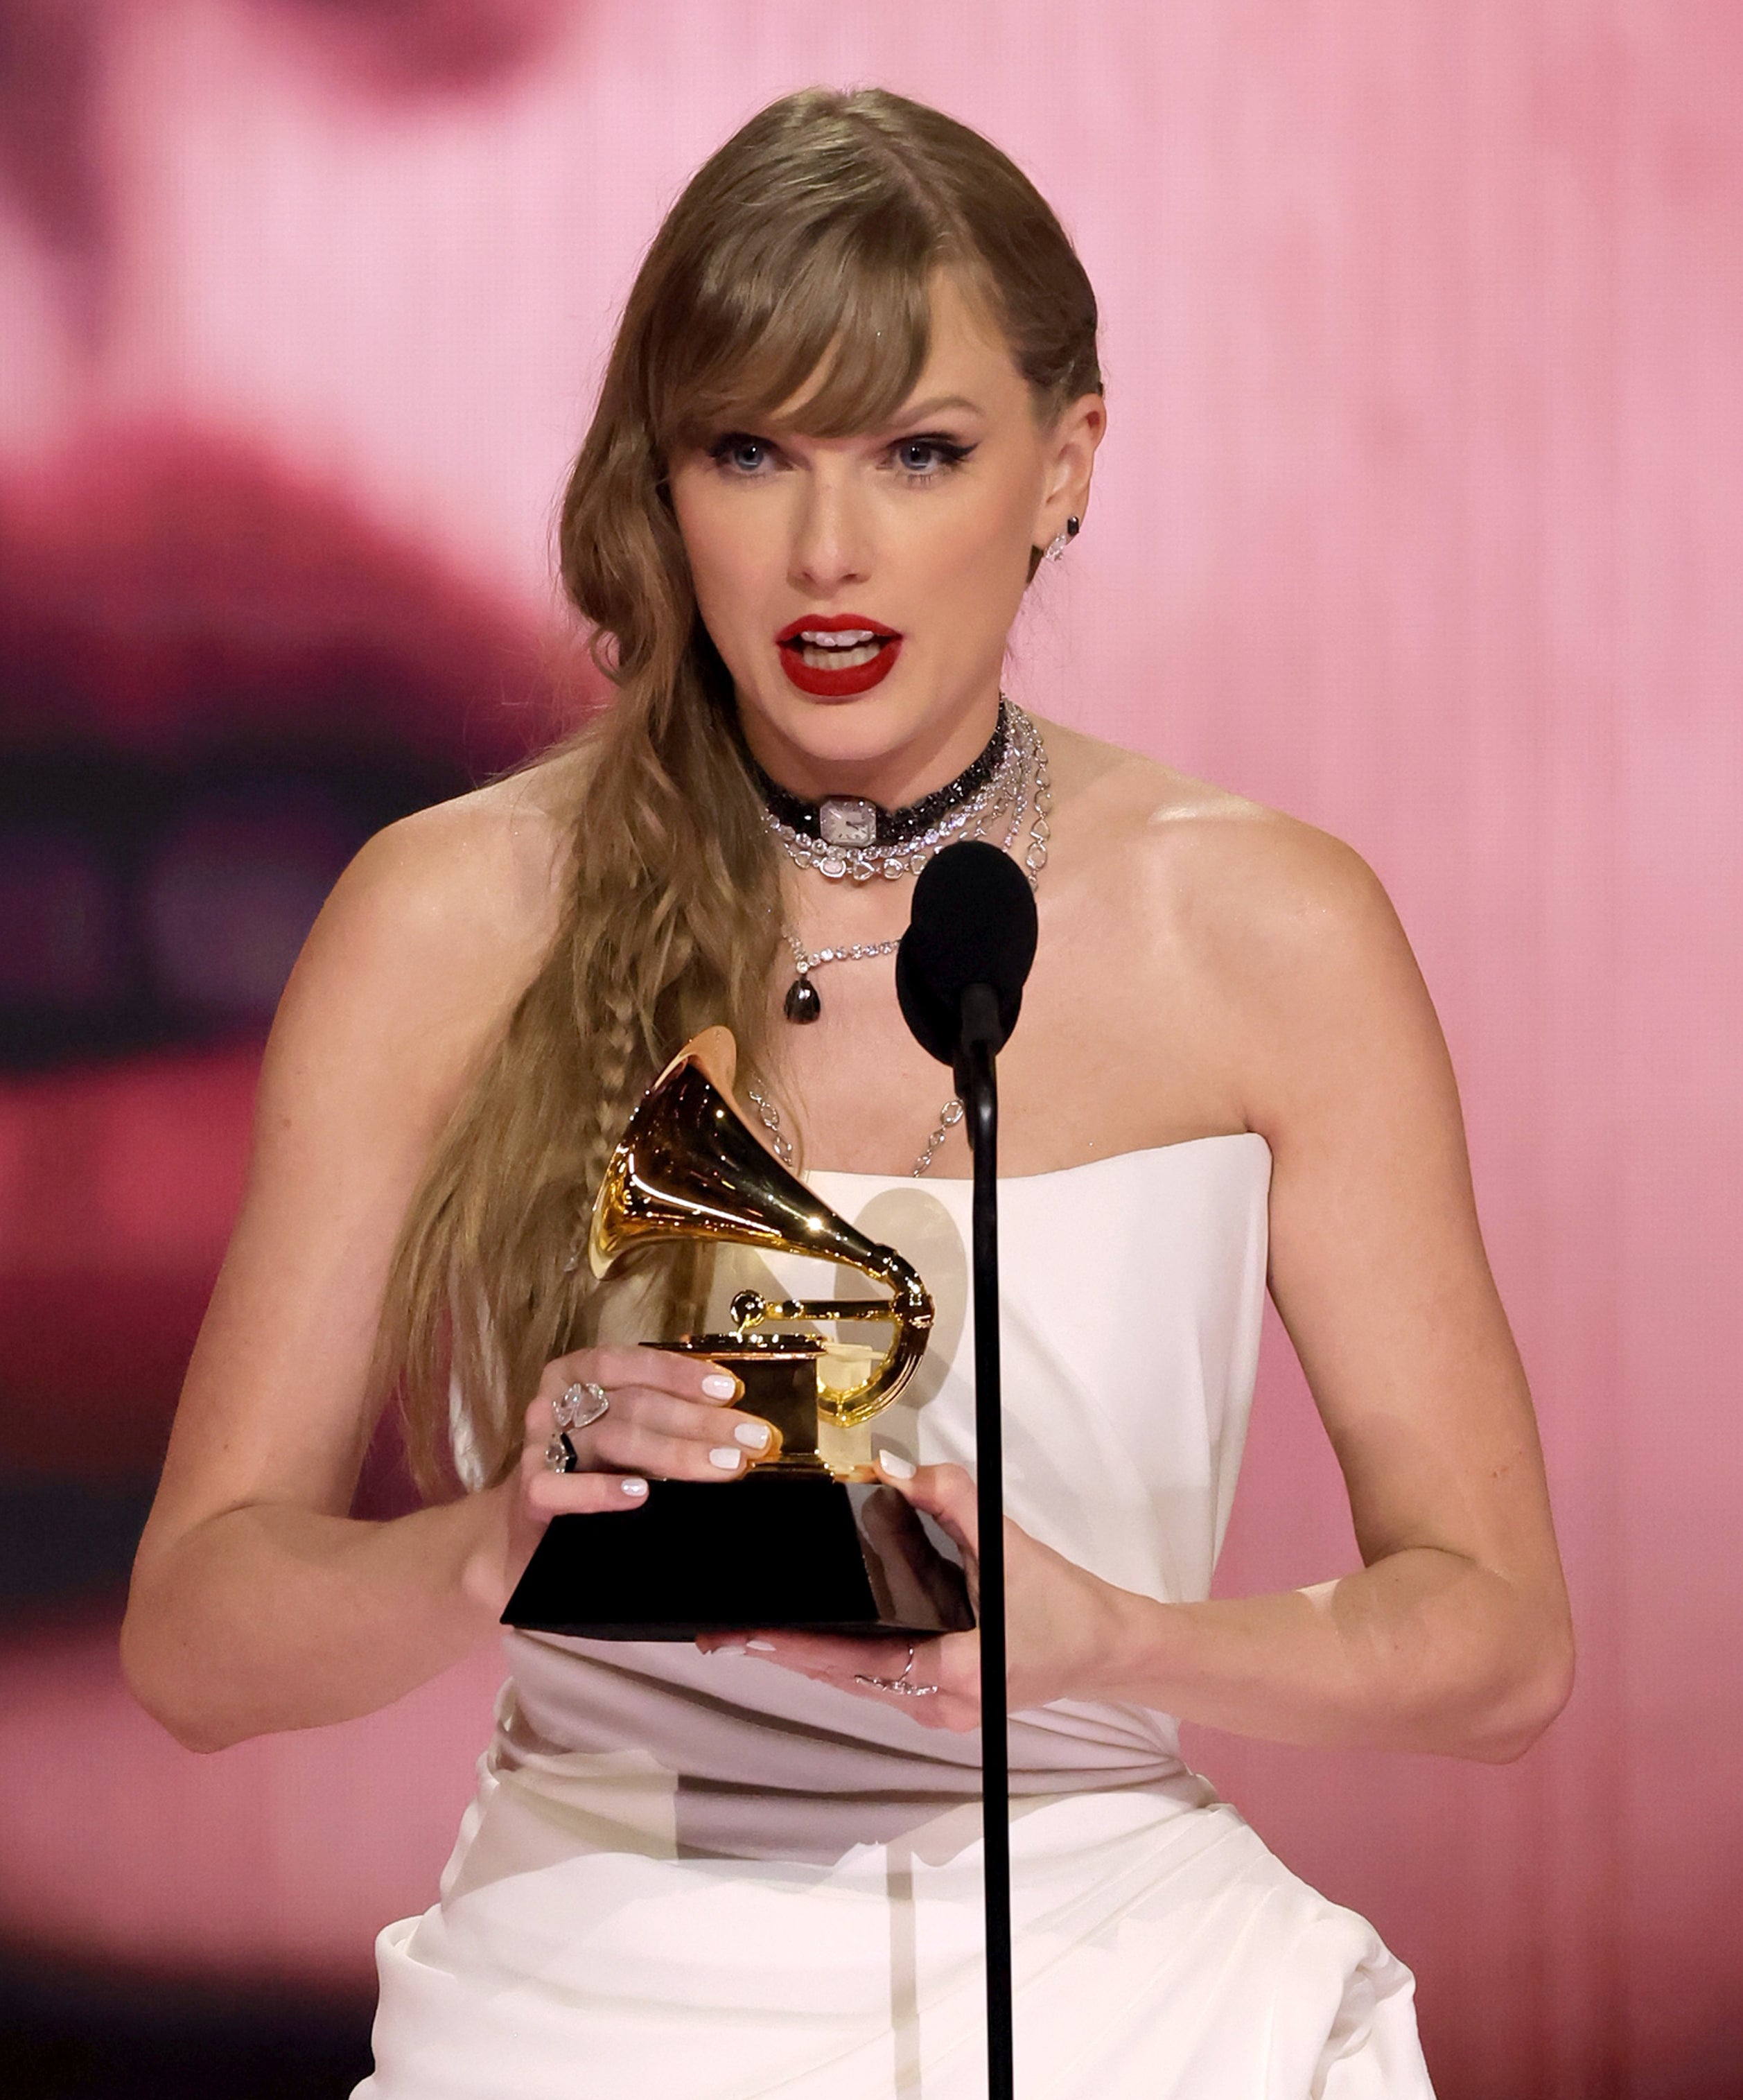 Taylor holding a Grammy award